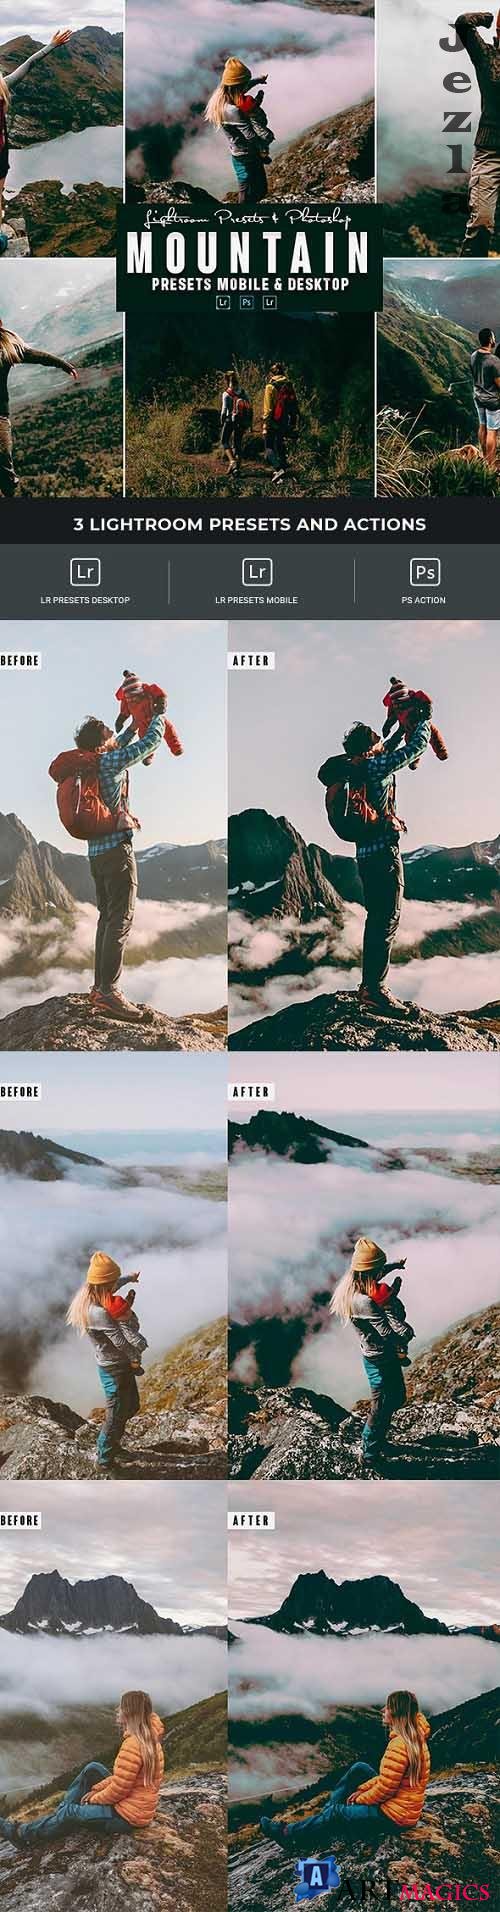 Mountain Photoshop Action & Lightrom Presets - 34684093